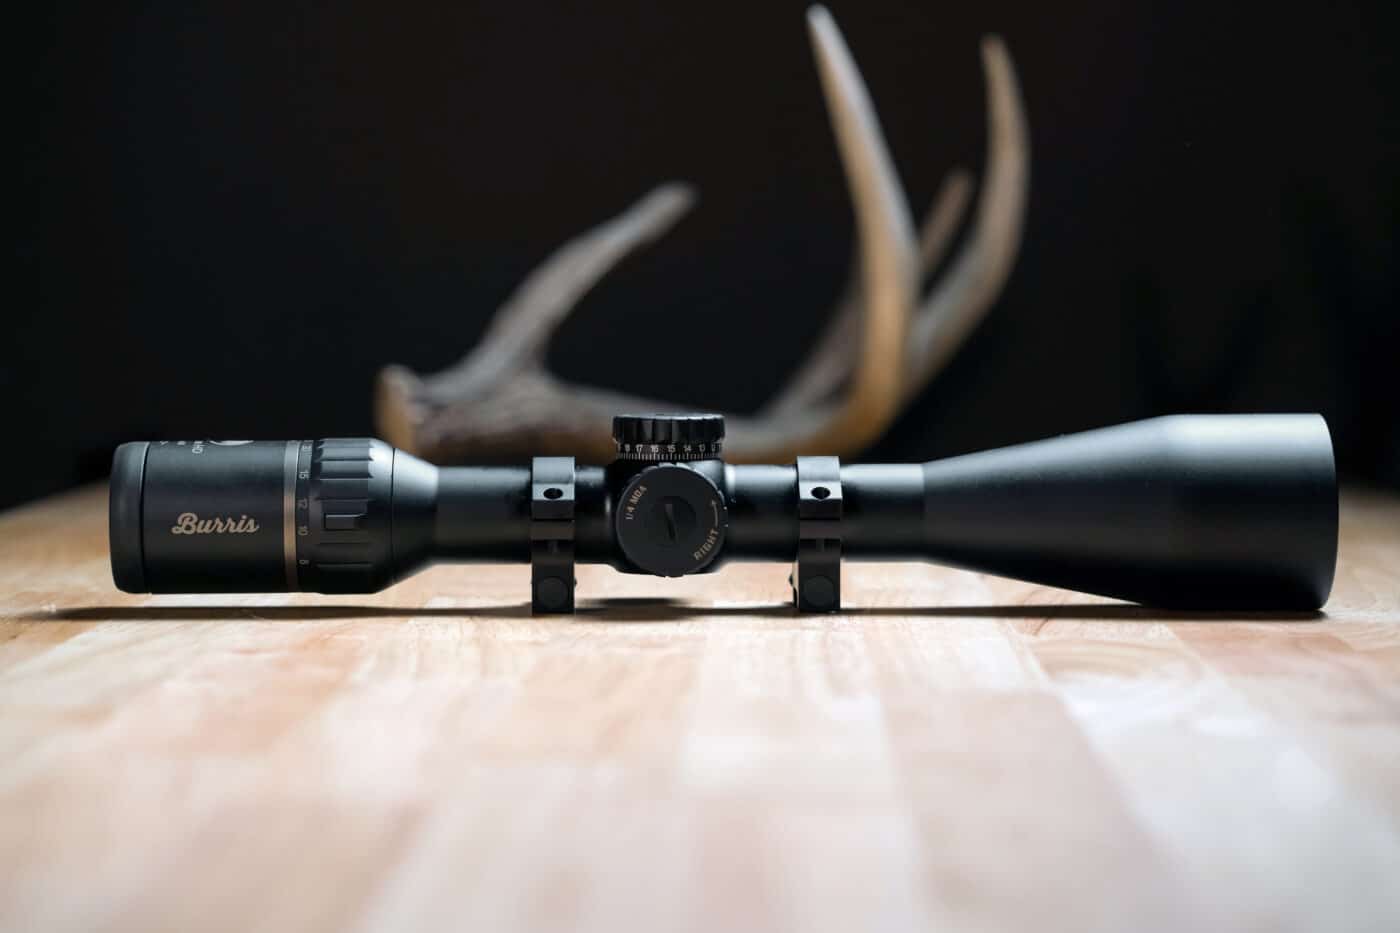 Burris Signature HD hunting scope